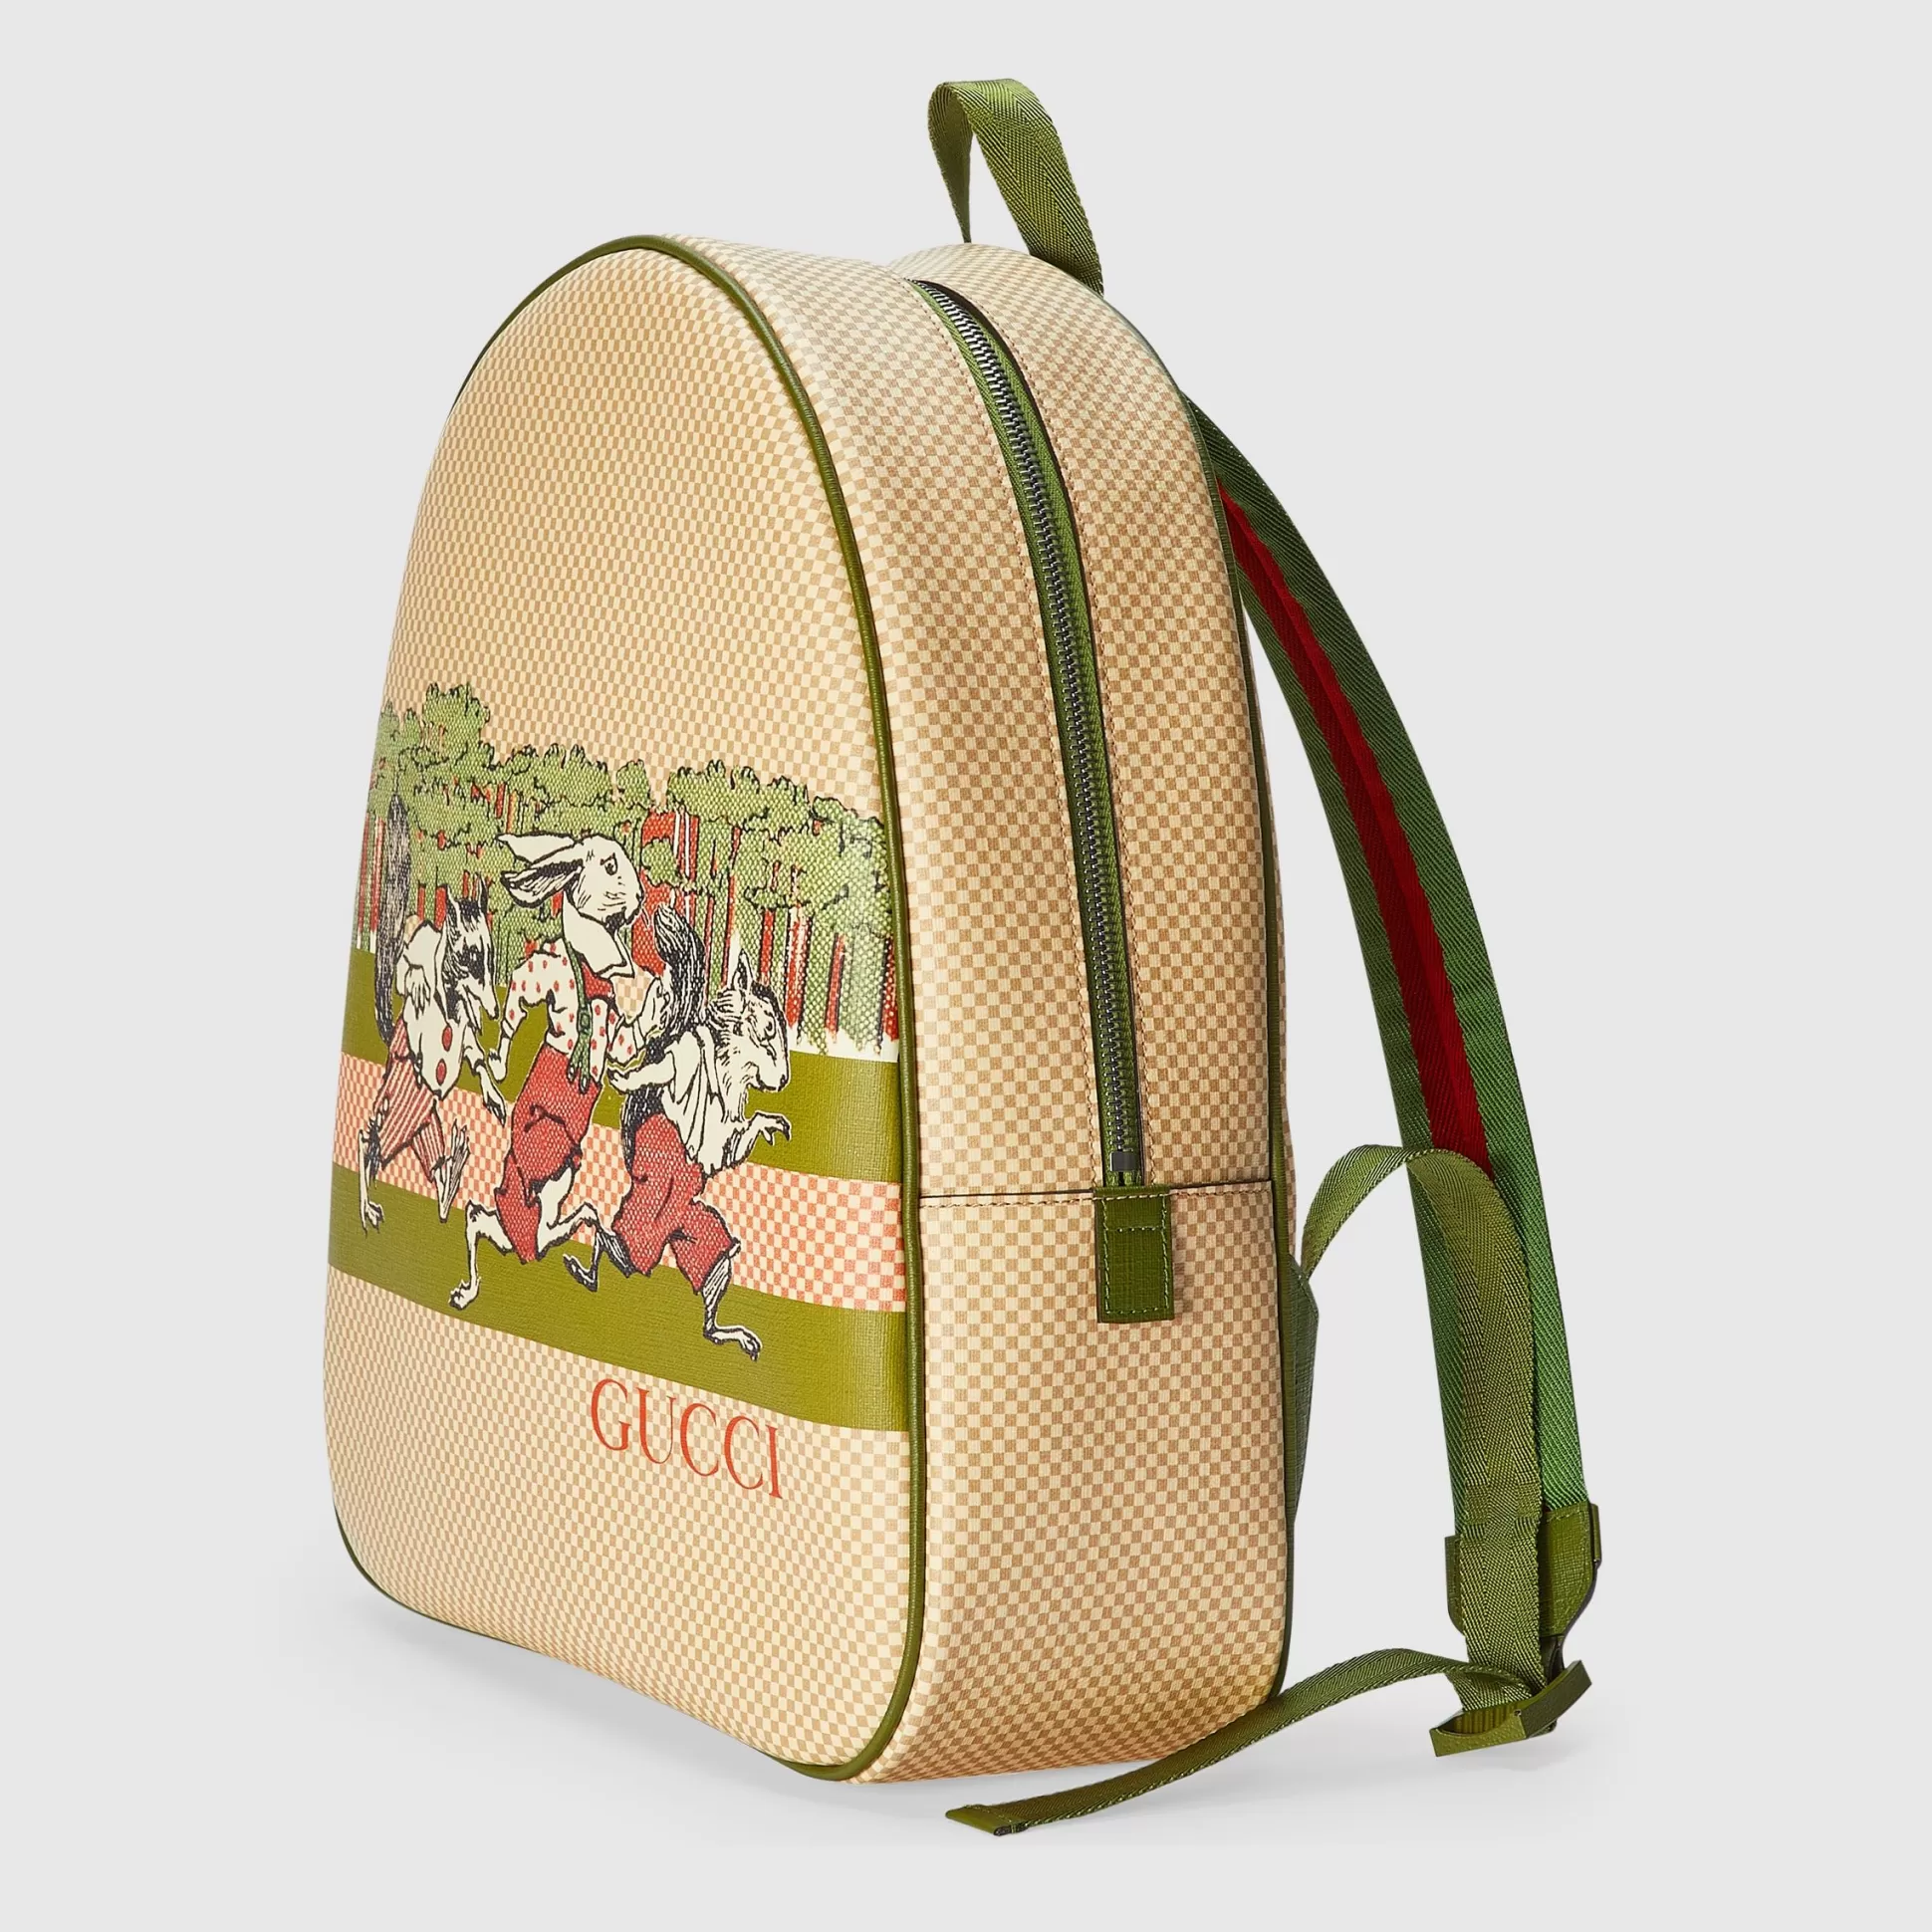 GUCCI Children'S Animal Print Backpack-Children Bags & Backpacks